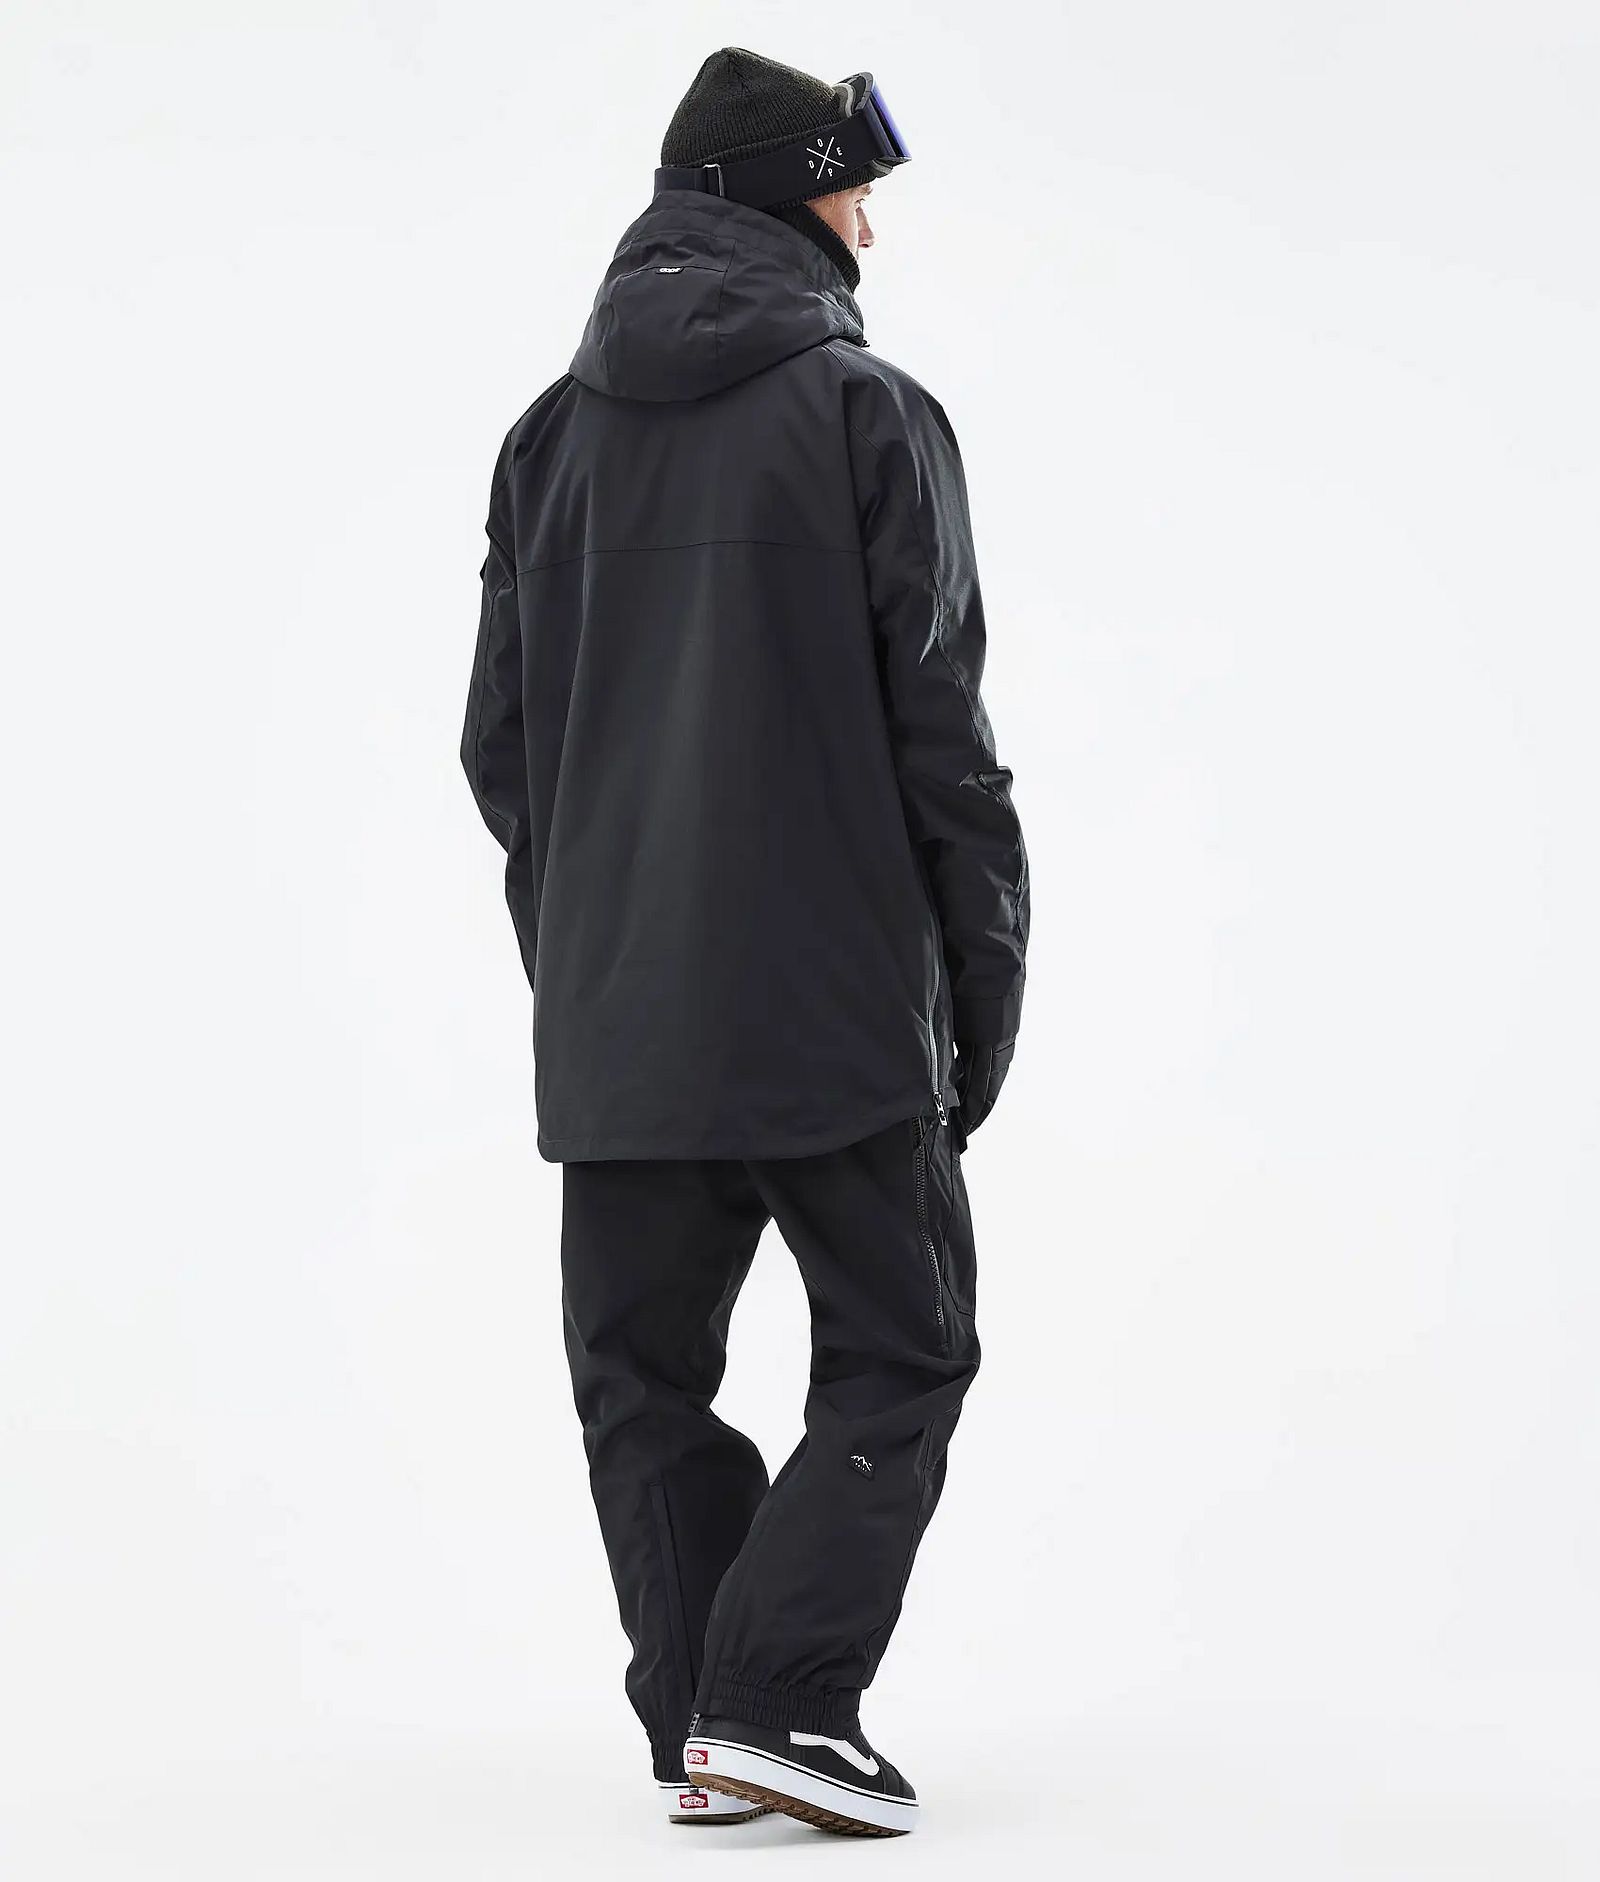 Akin Outfit Snowboard Uomo Black